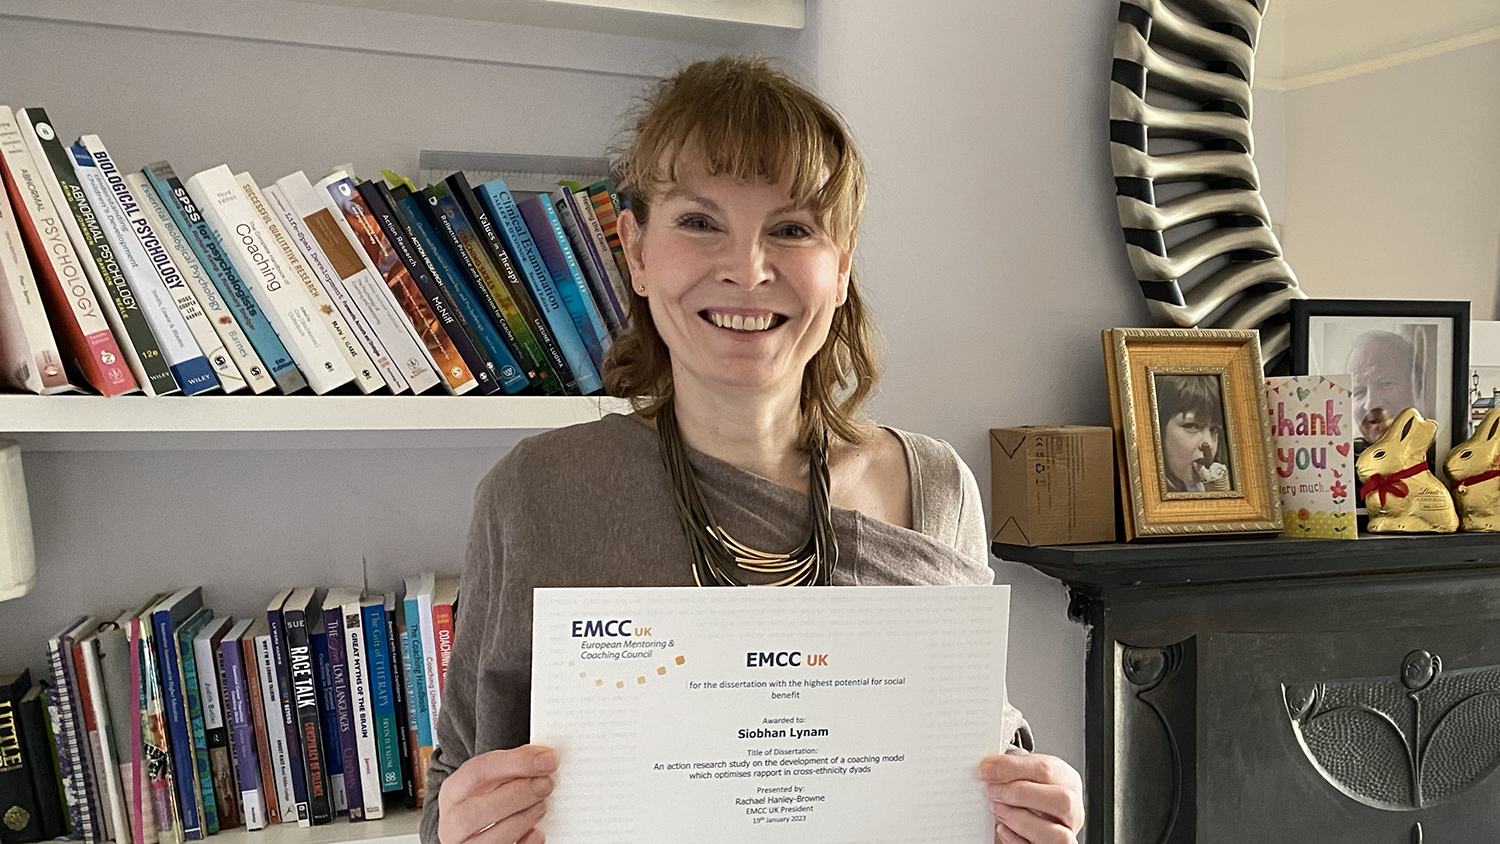 Siobhan Lynam with her EMCC UK award